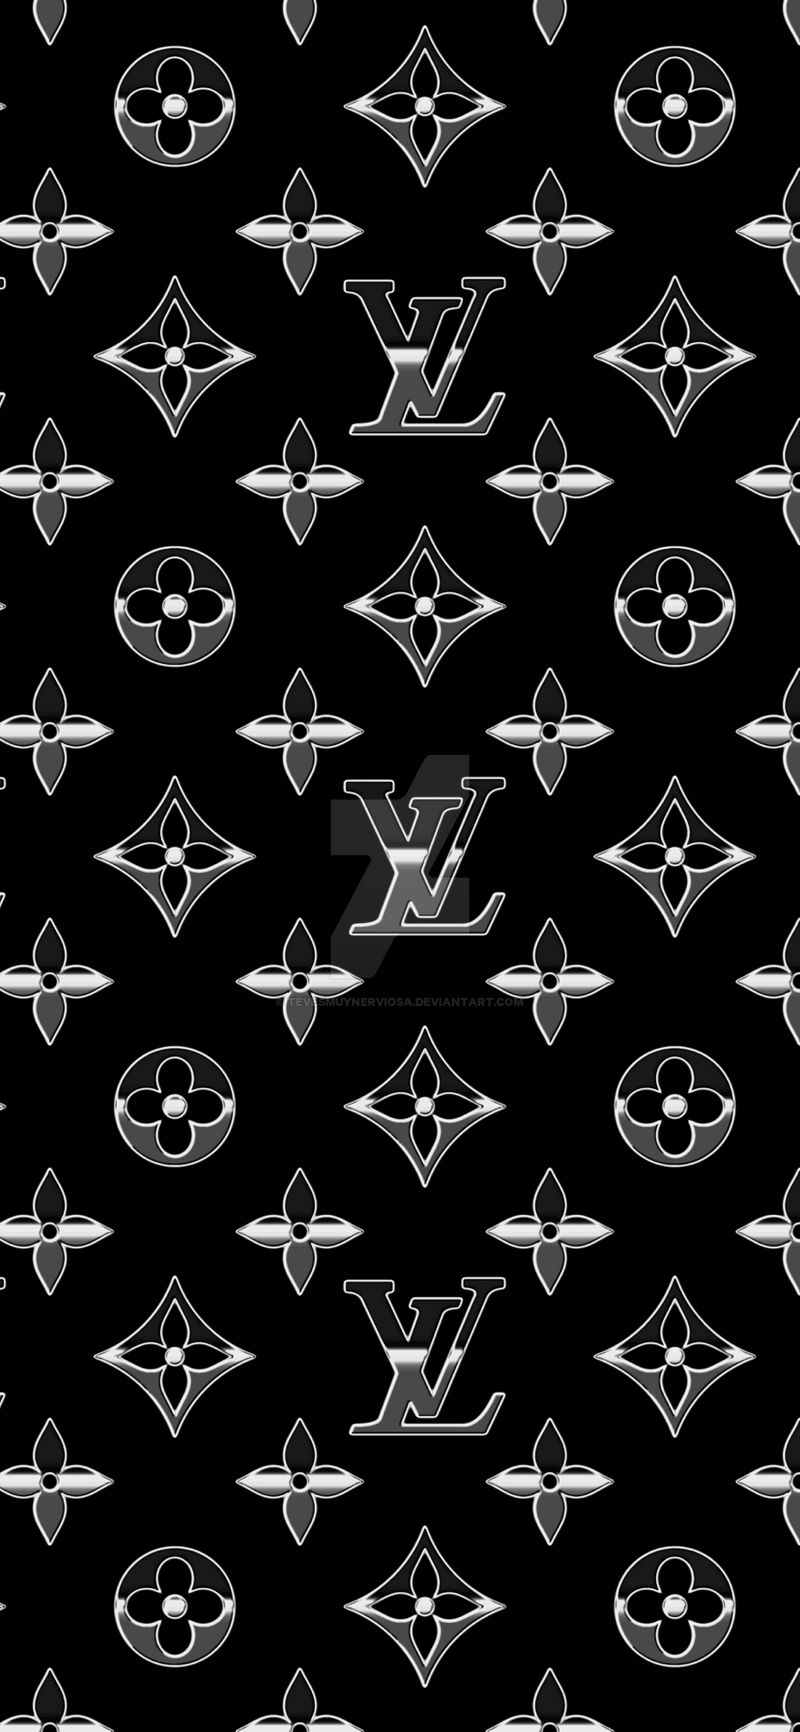 Louis Vuitton Patterns, Vol. 2: Murakami by itsfarahbakhsh on DeviantArt